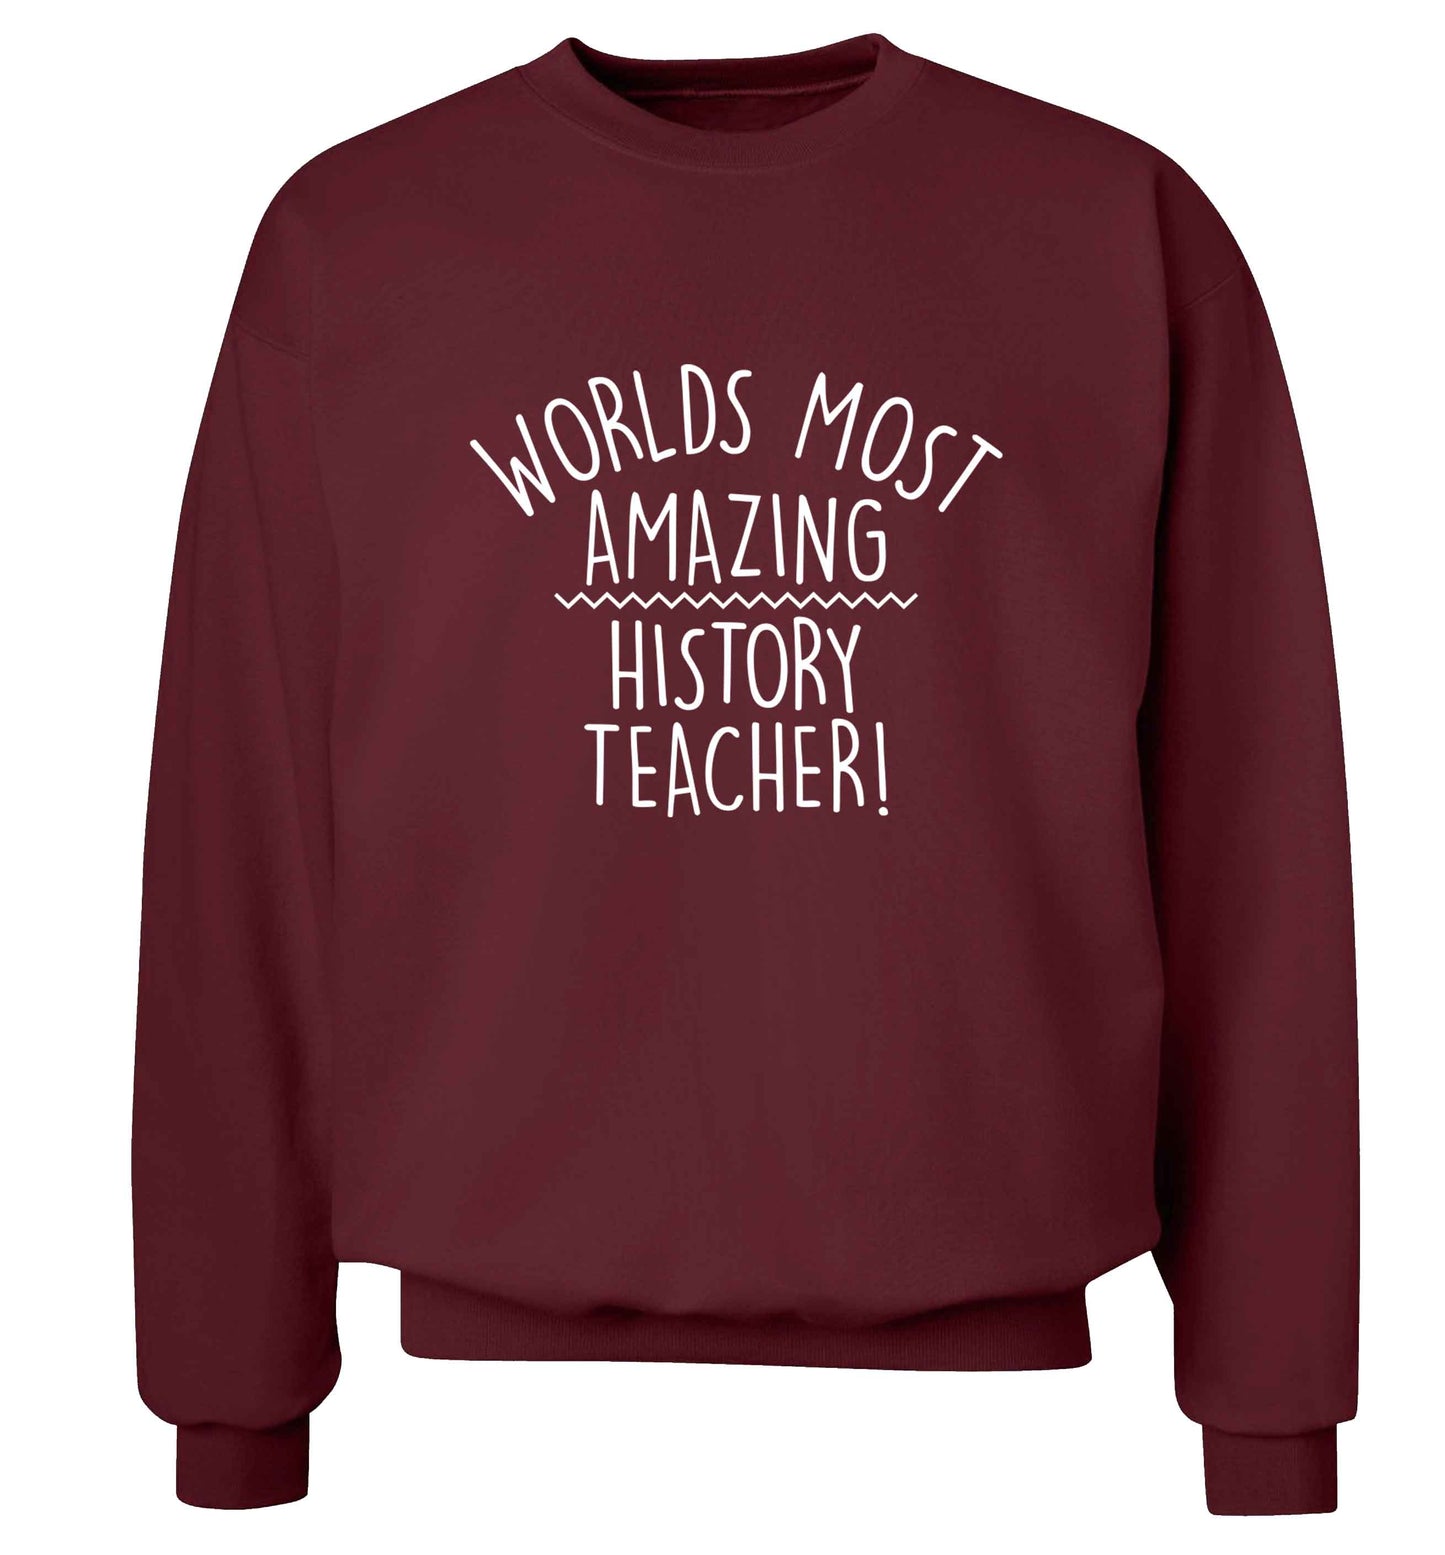 Worlds most amazing History teacher adult's unisex maroon sweater 2XL